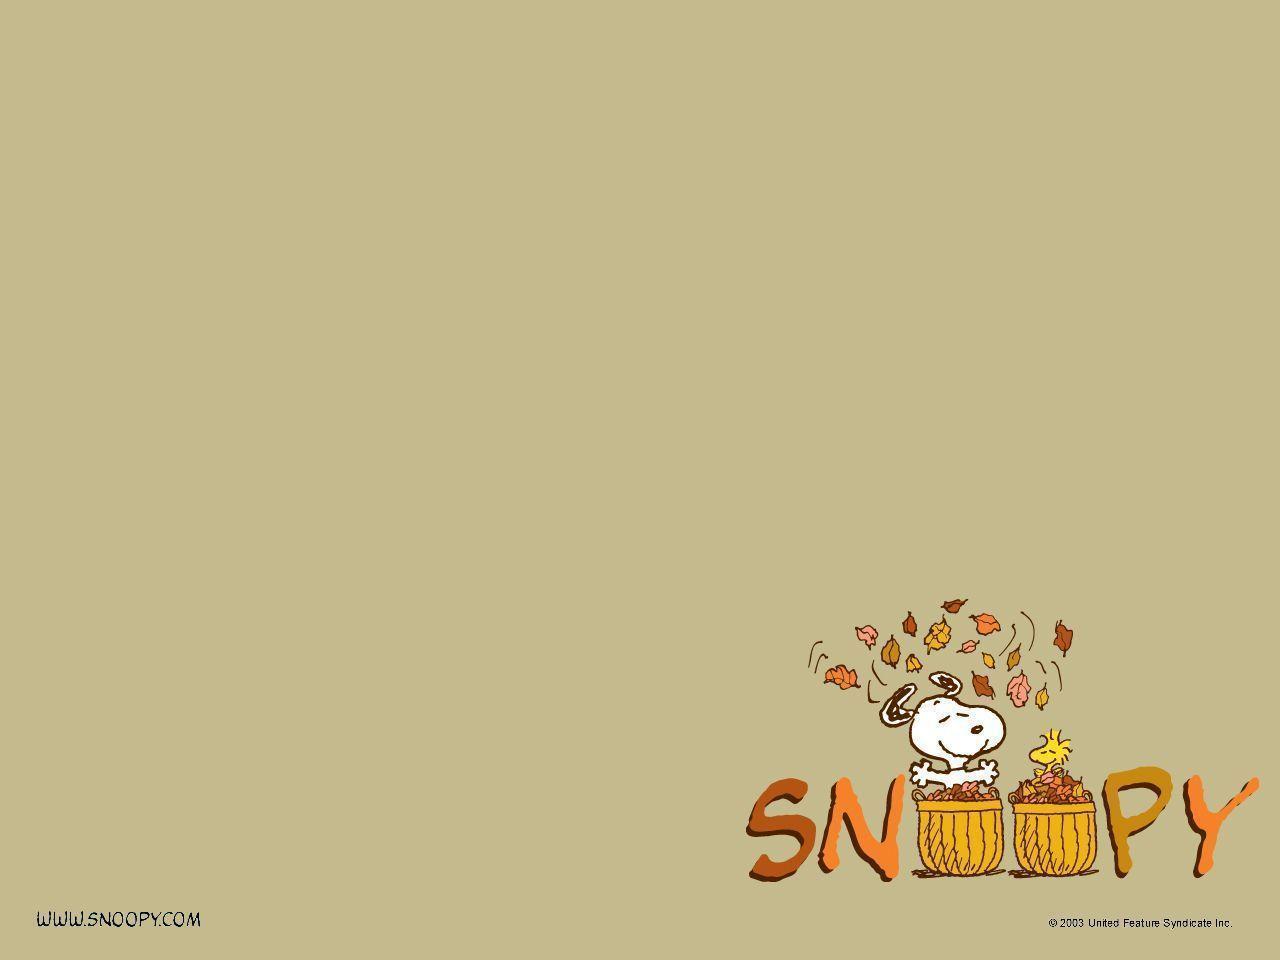 Snoopy Backgrounds  PixelsTalkNet